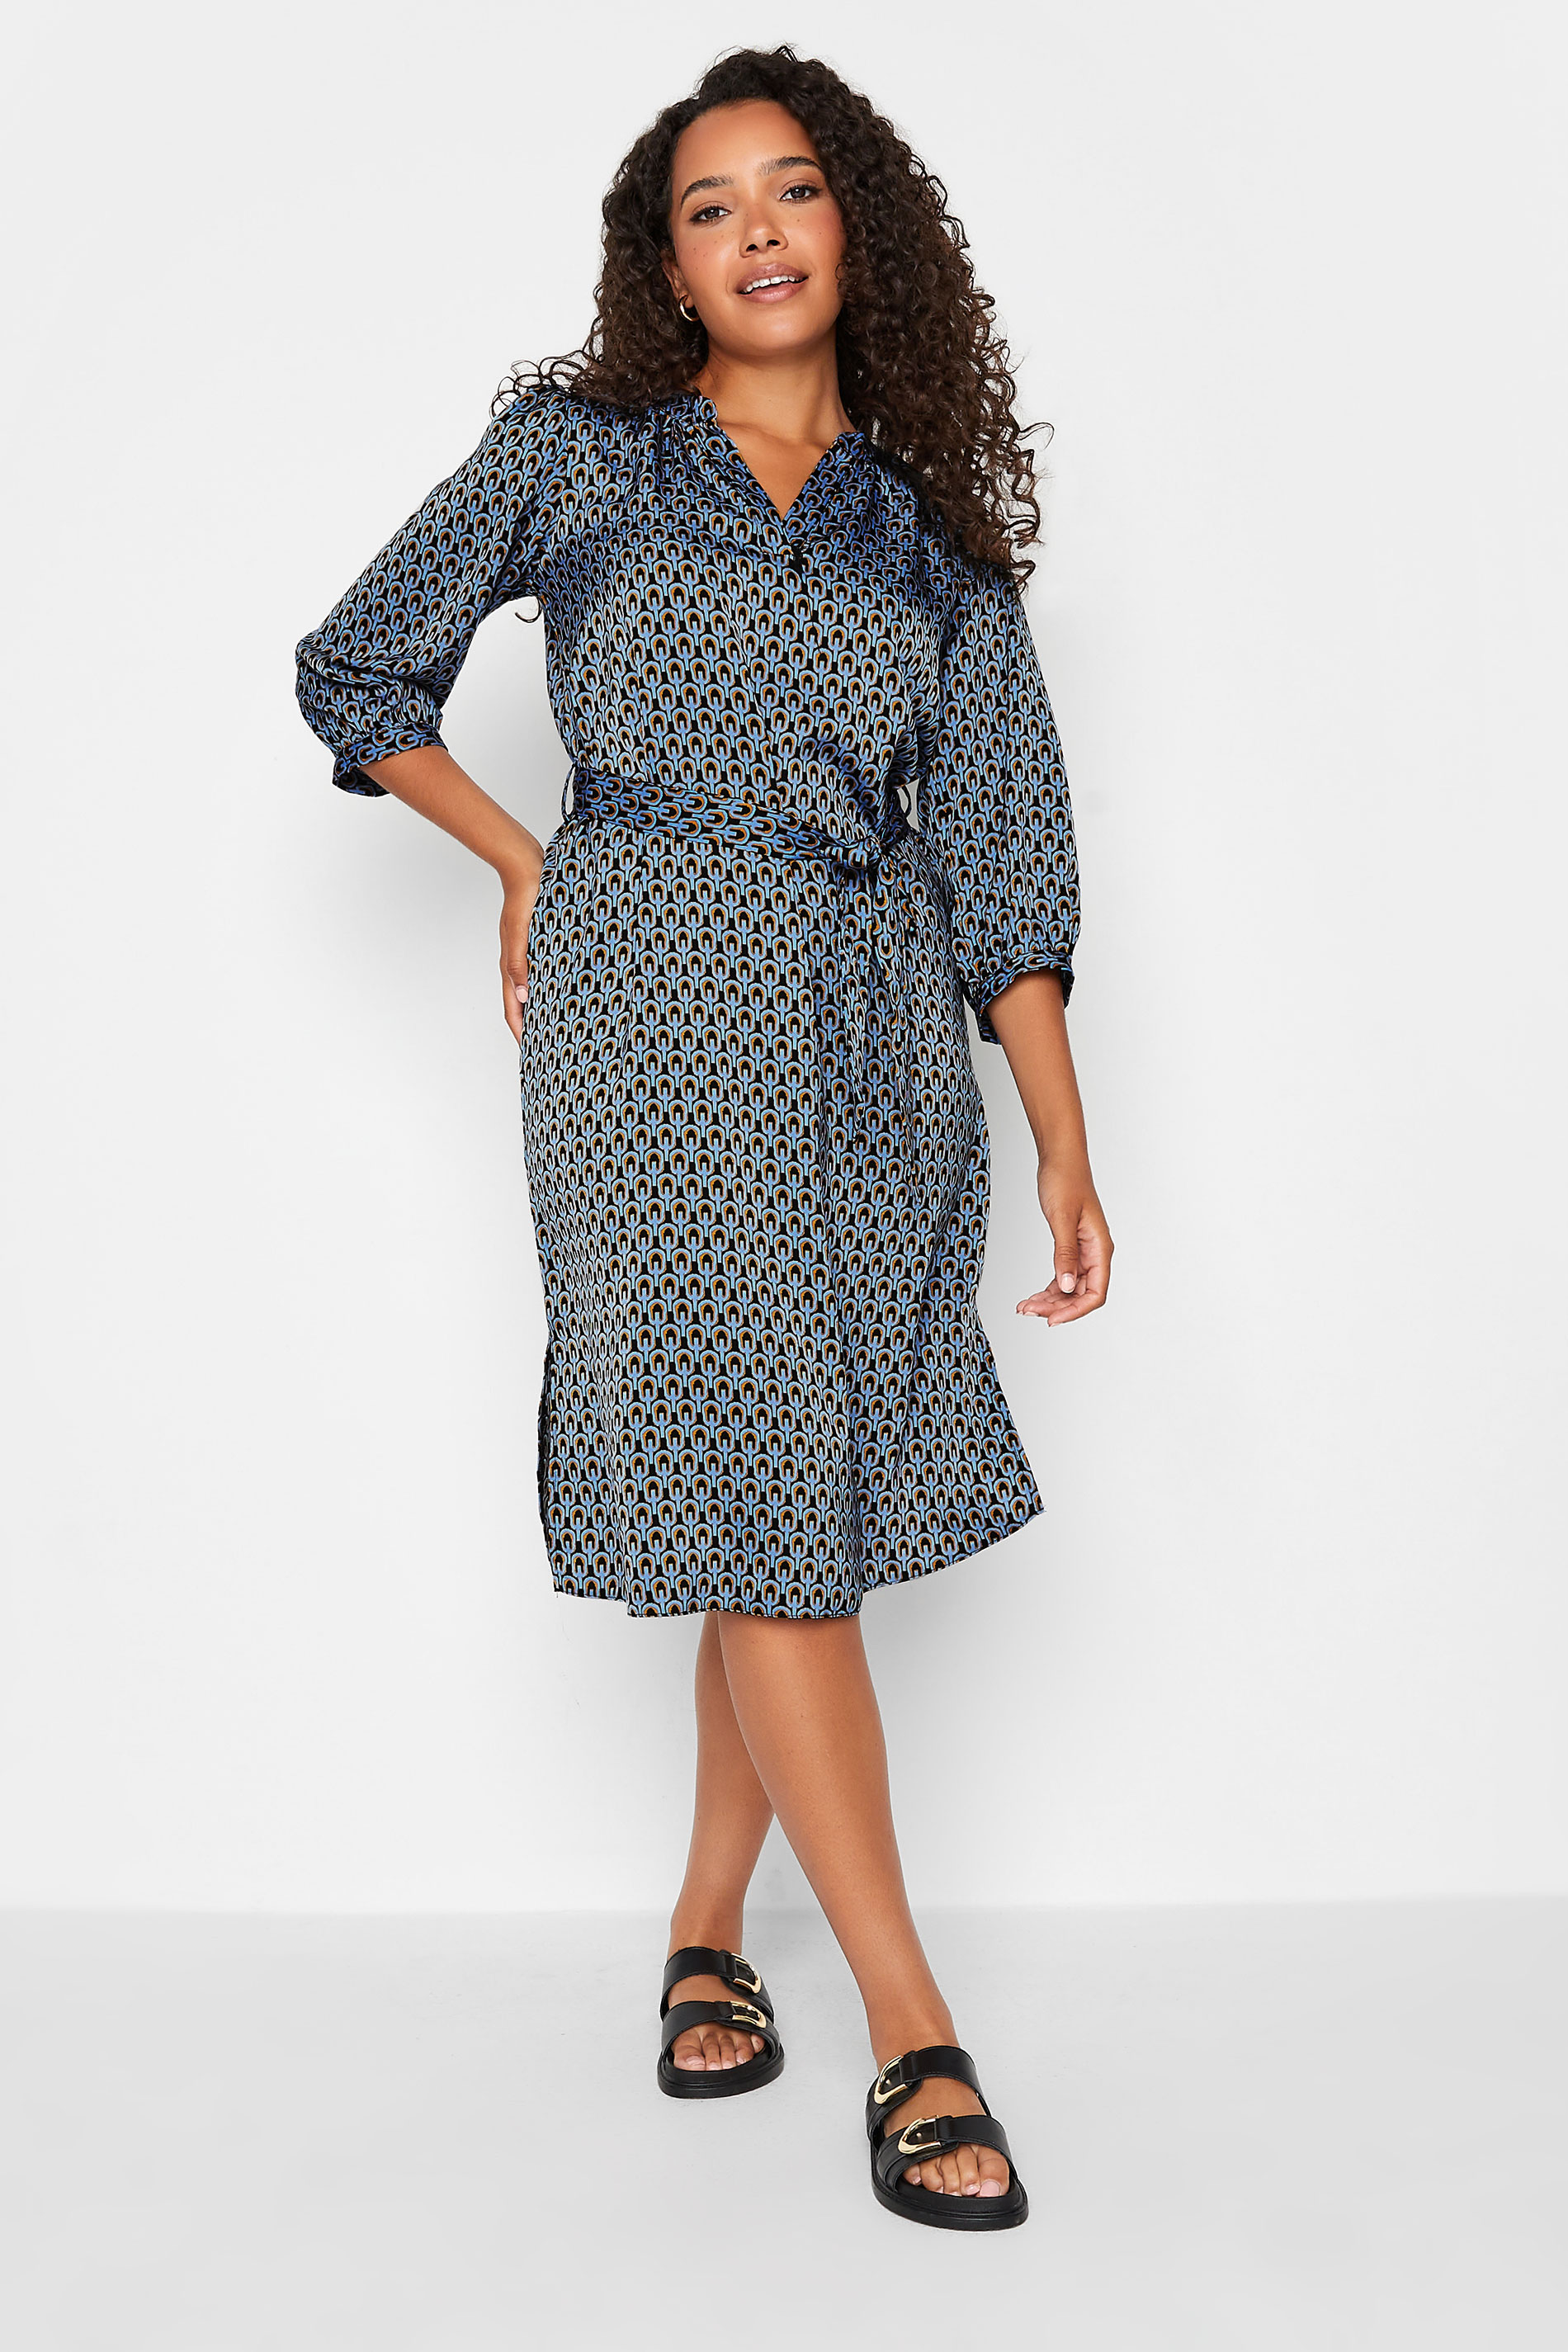 M&Co Blue Geometric Print Tunic Dress | M&Co 1